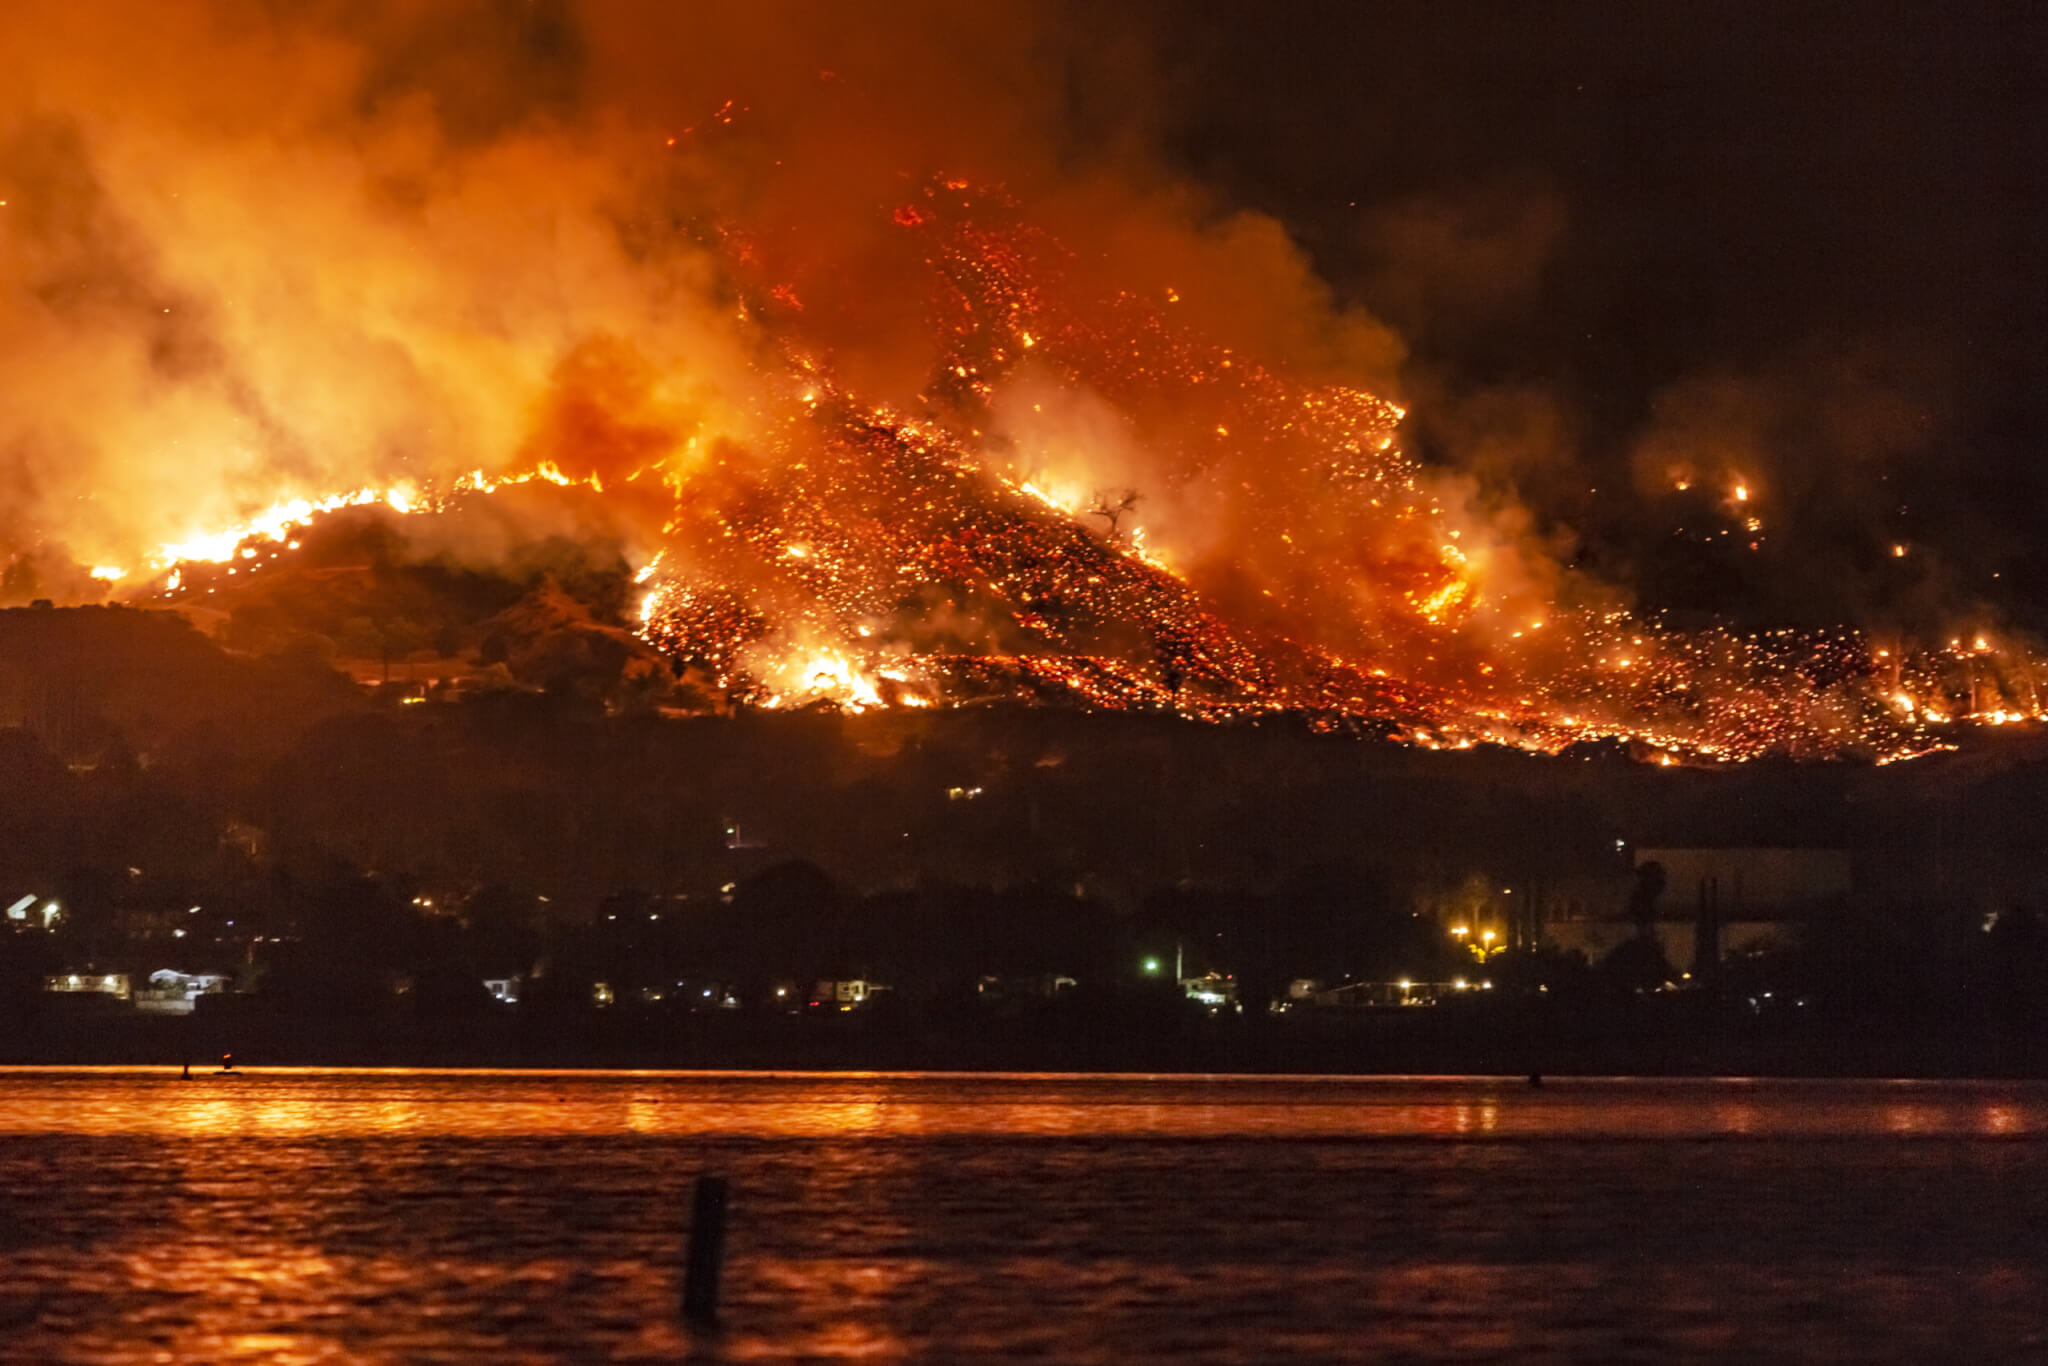 Wildfire near Lake Elsinore, California